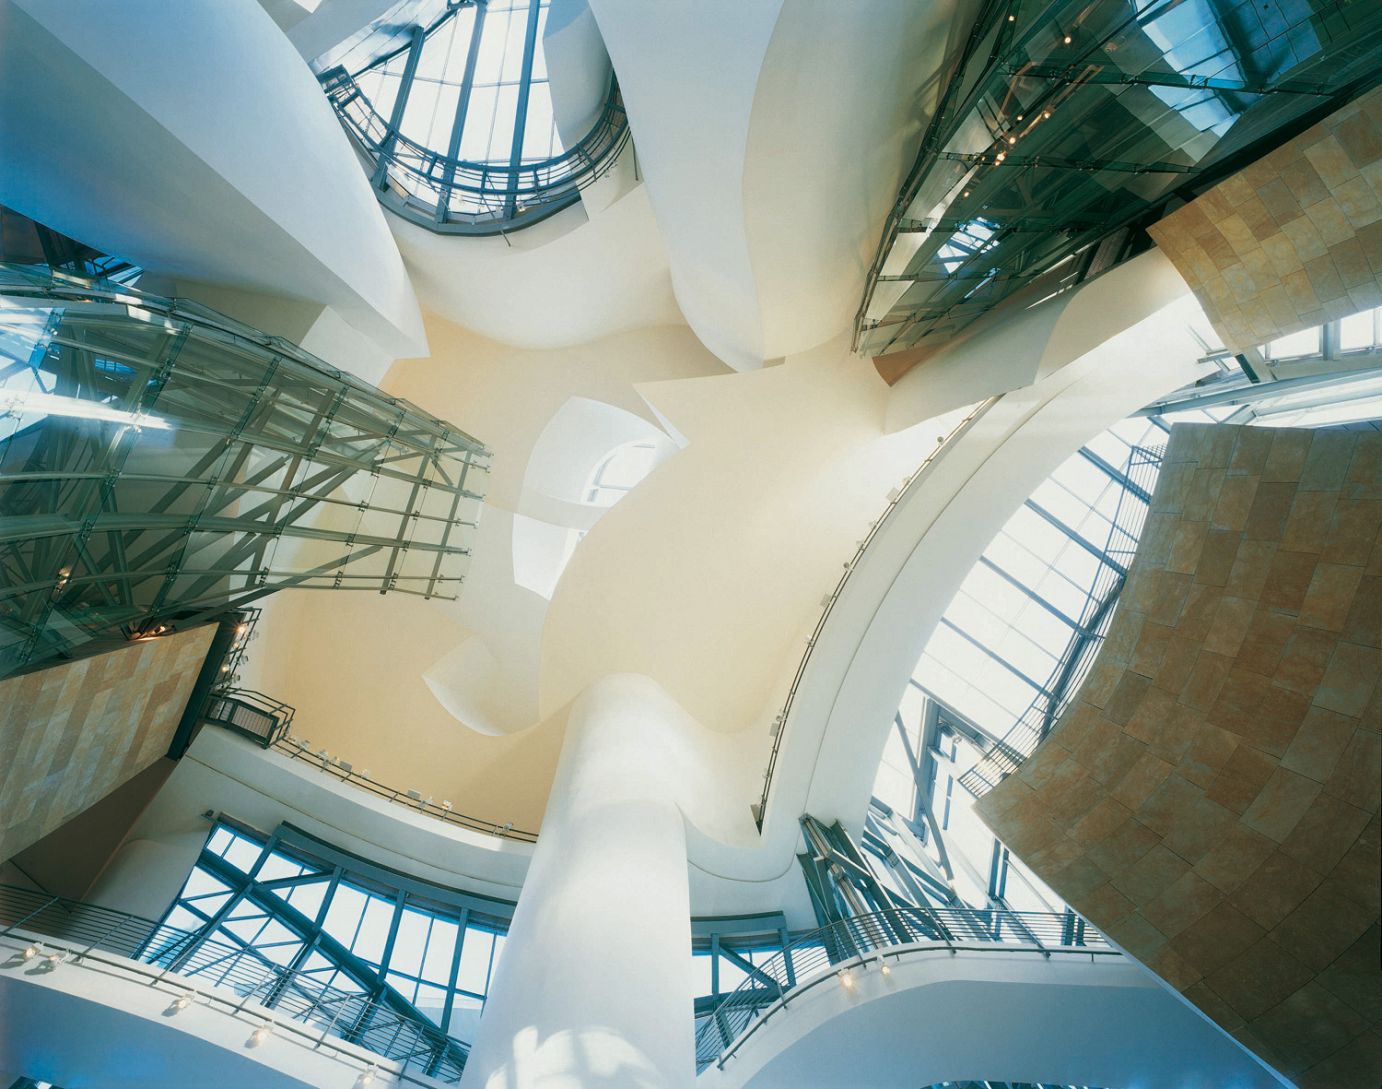 Solomon R. Guggenheim Museum Interior - Stock Image - Everypixel